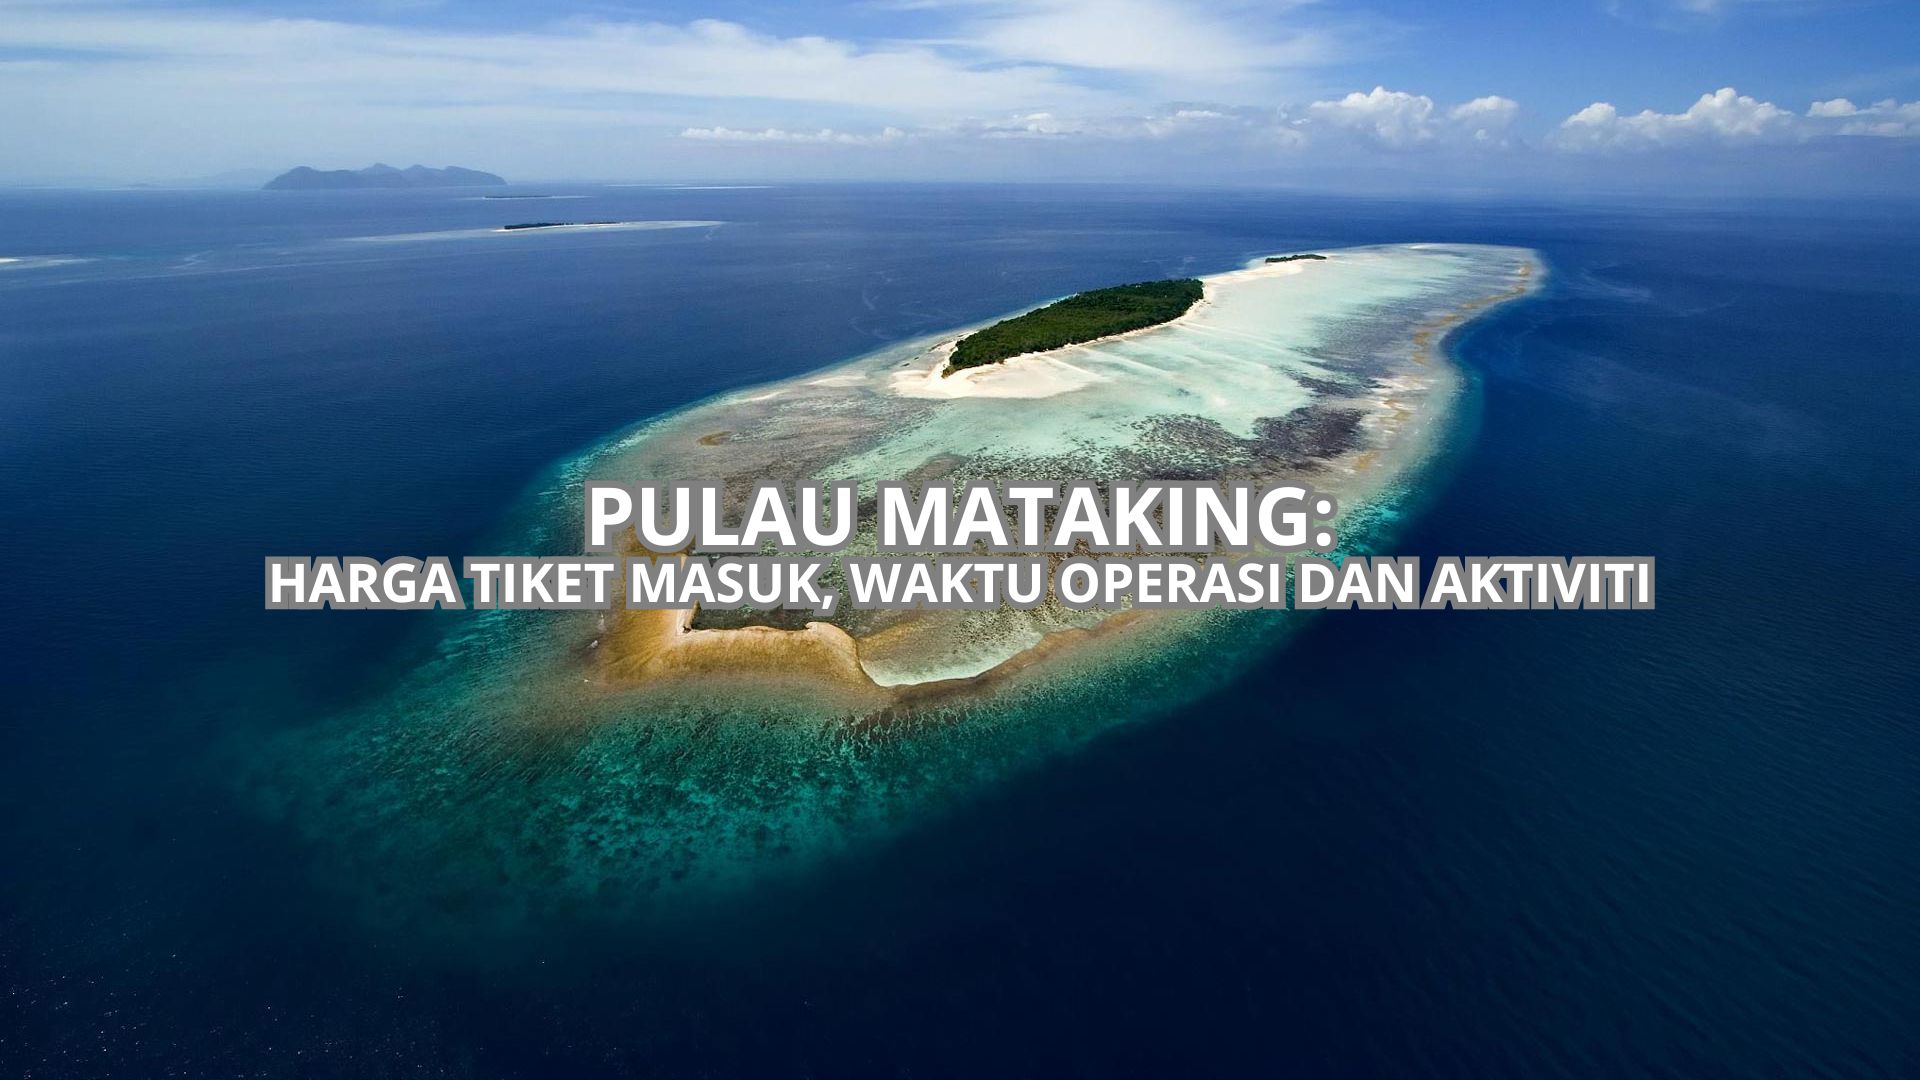 Pulau Mataking Cover